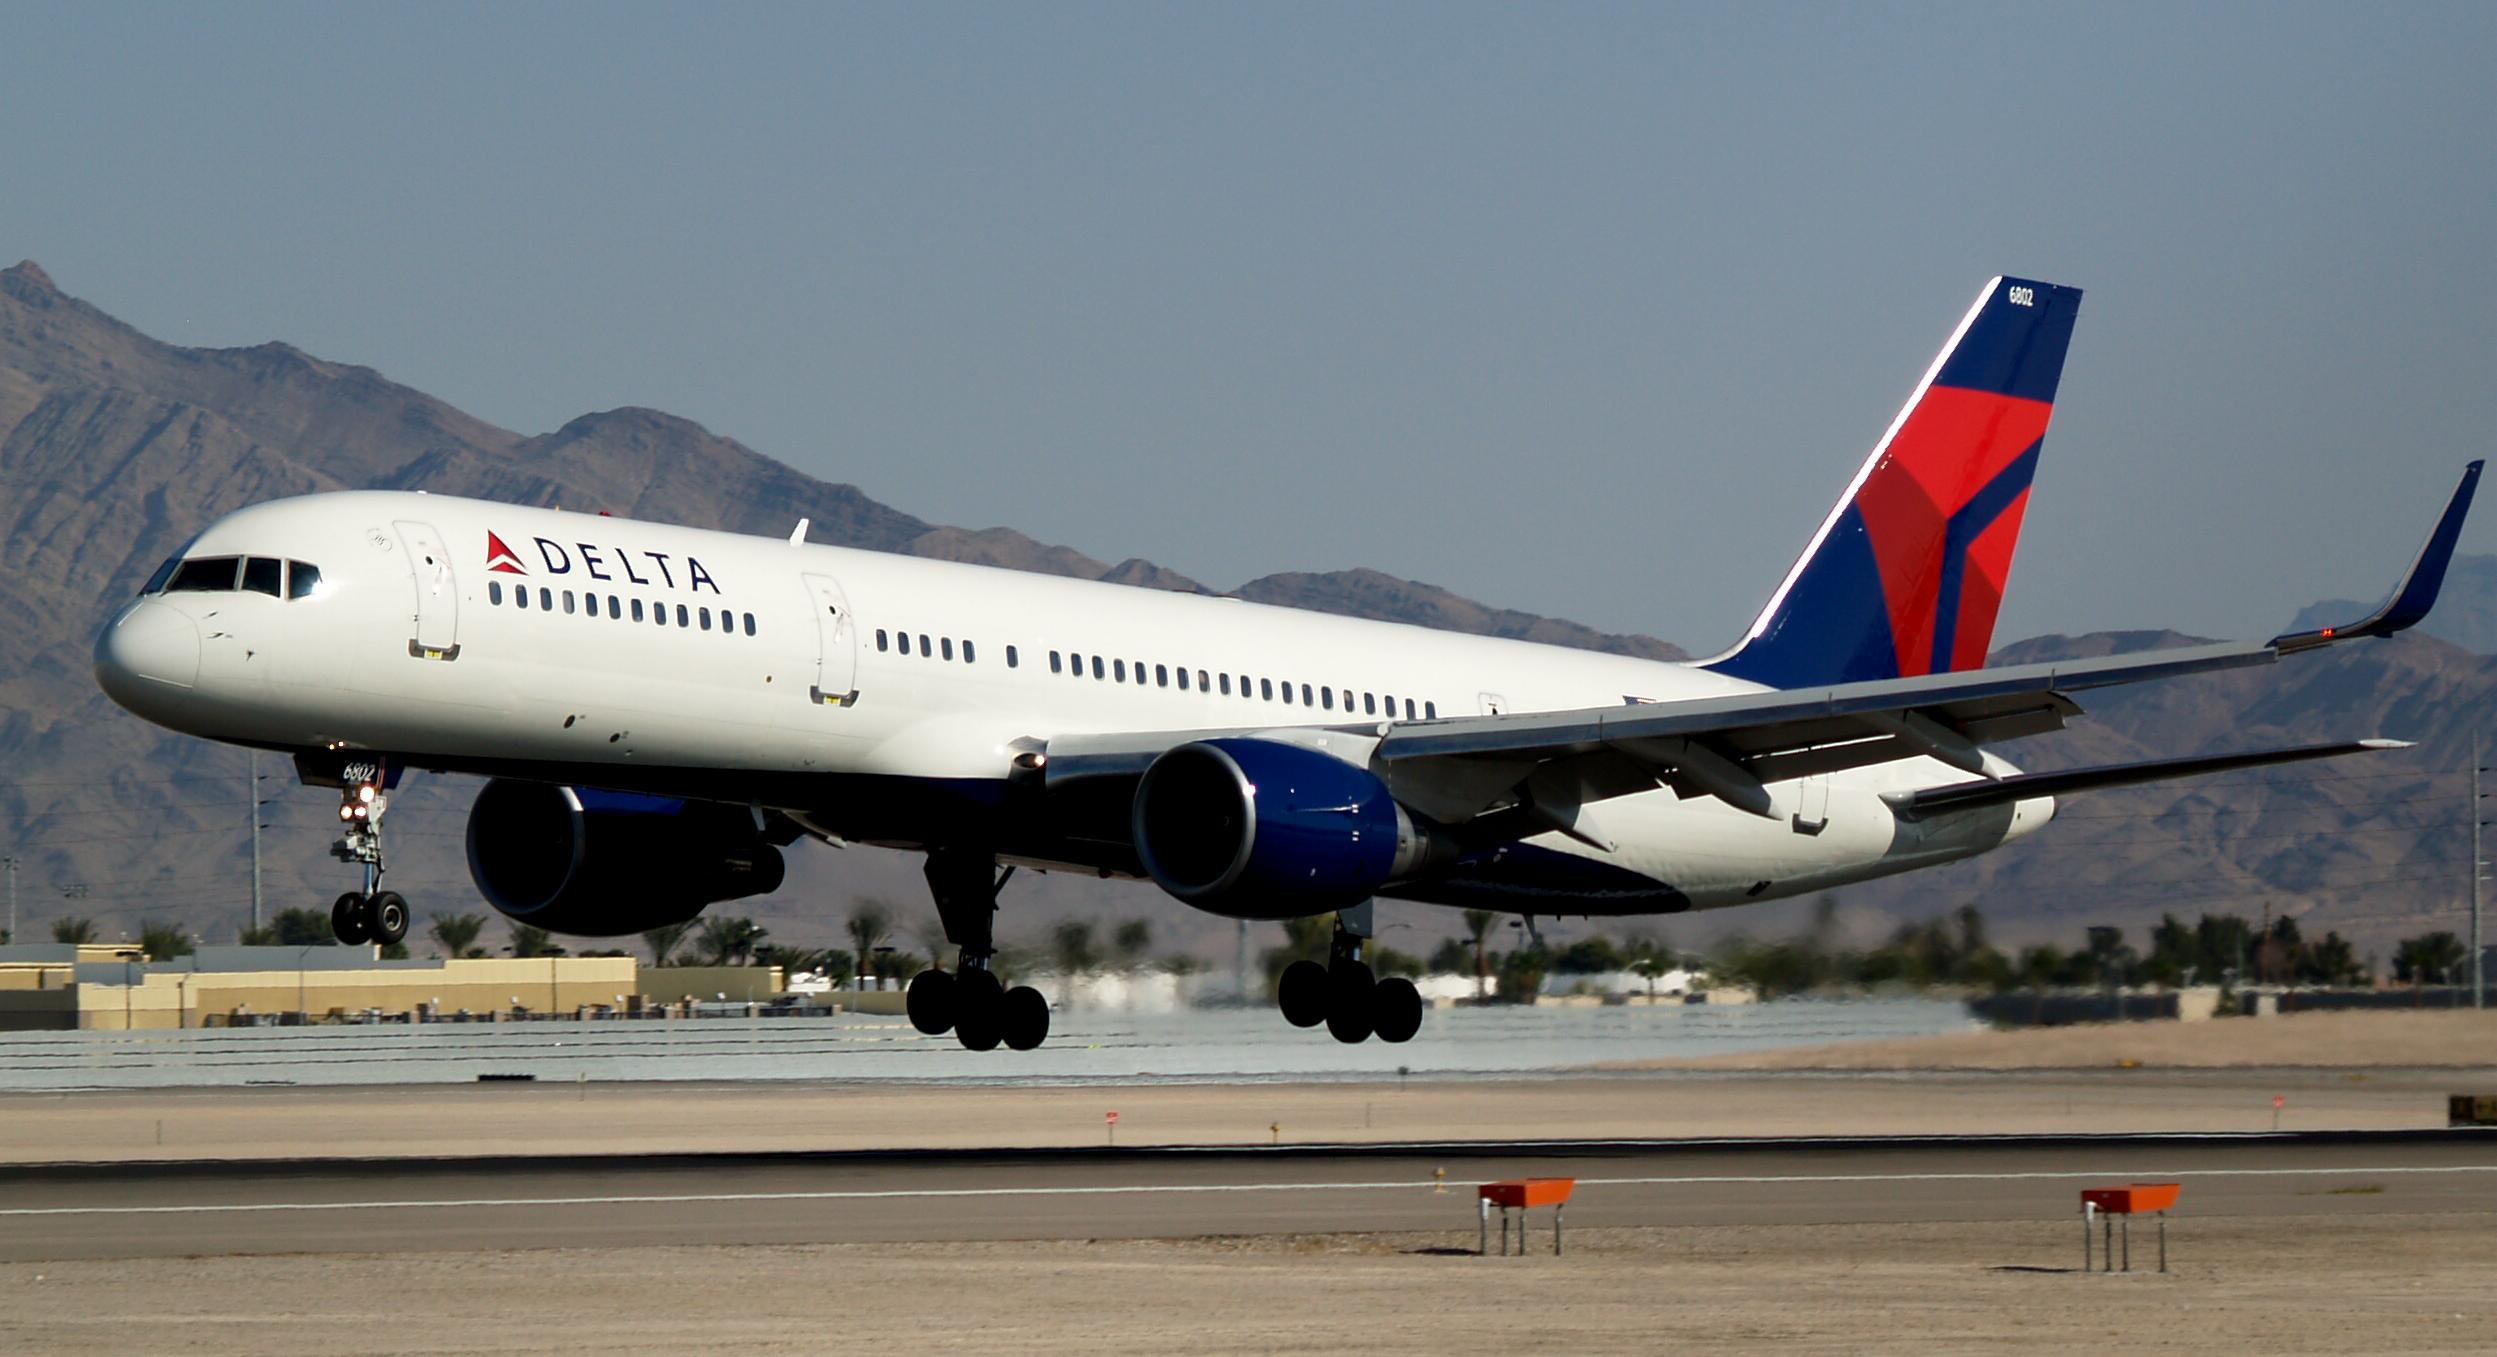 BREAKING: U.S. Airlines Suspend Service To Israel